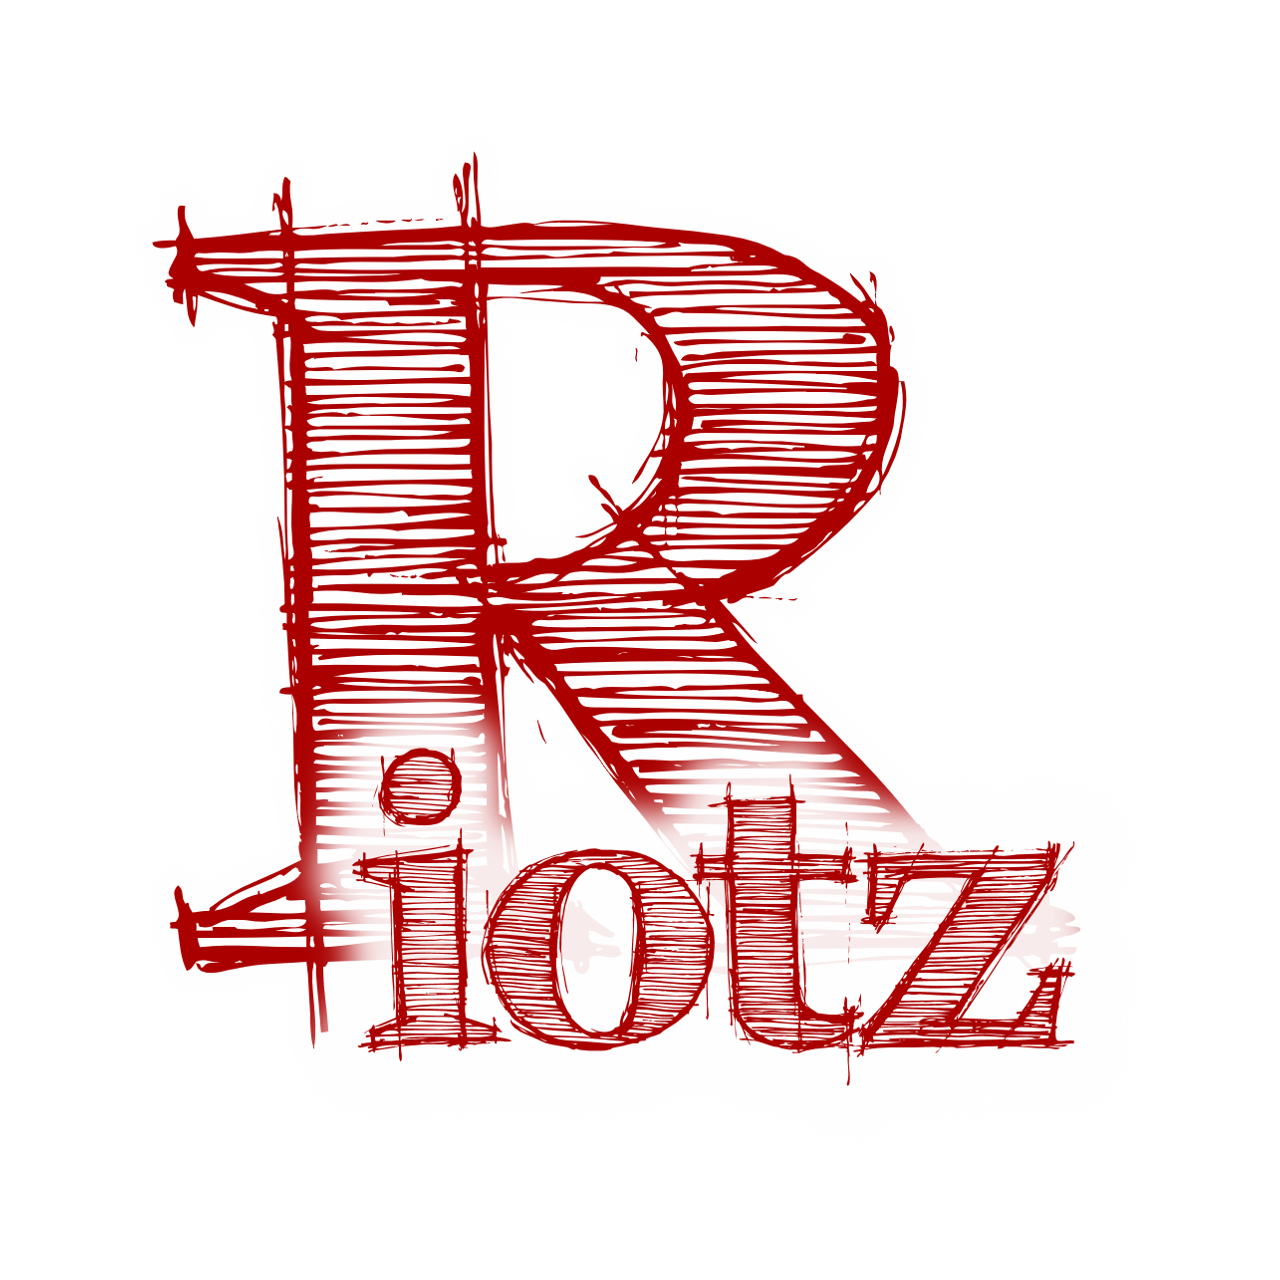 Articles Riotz Works